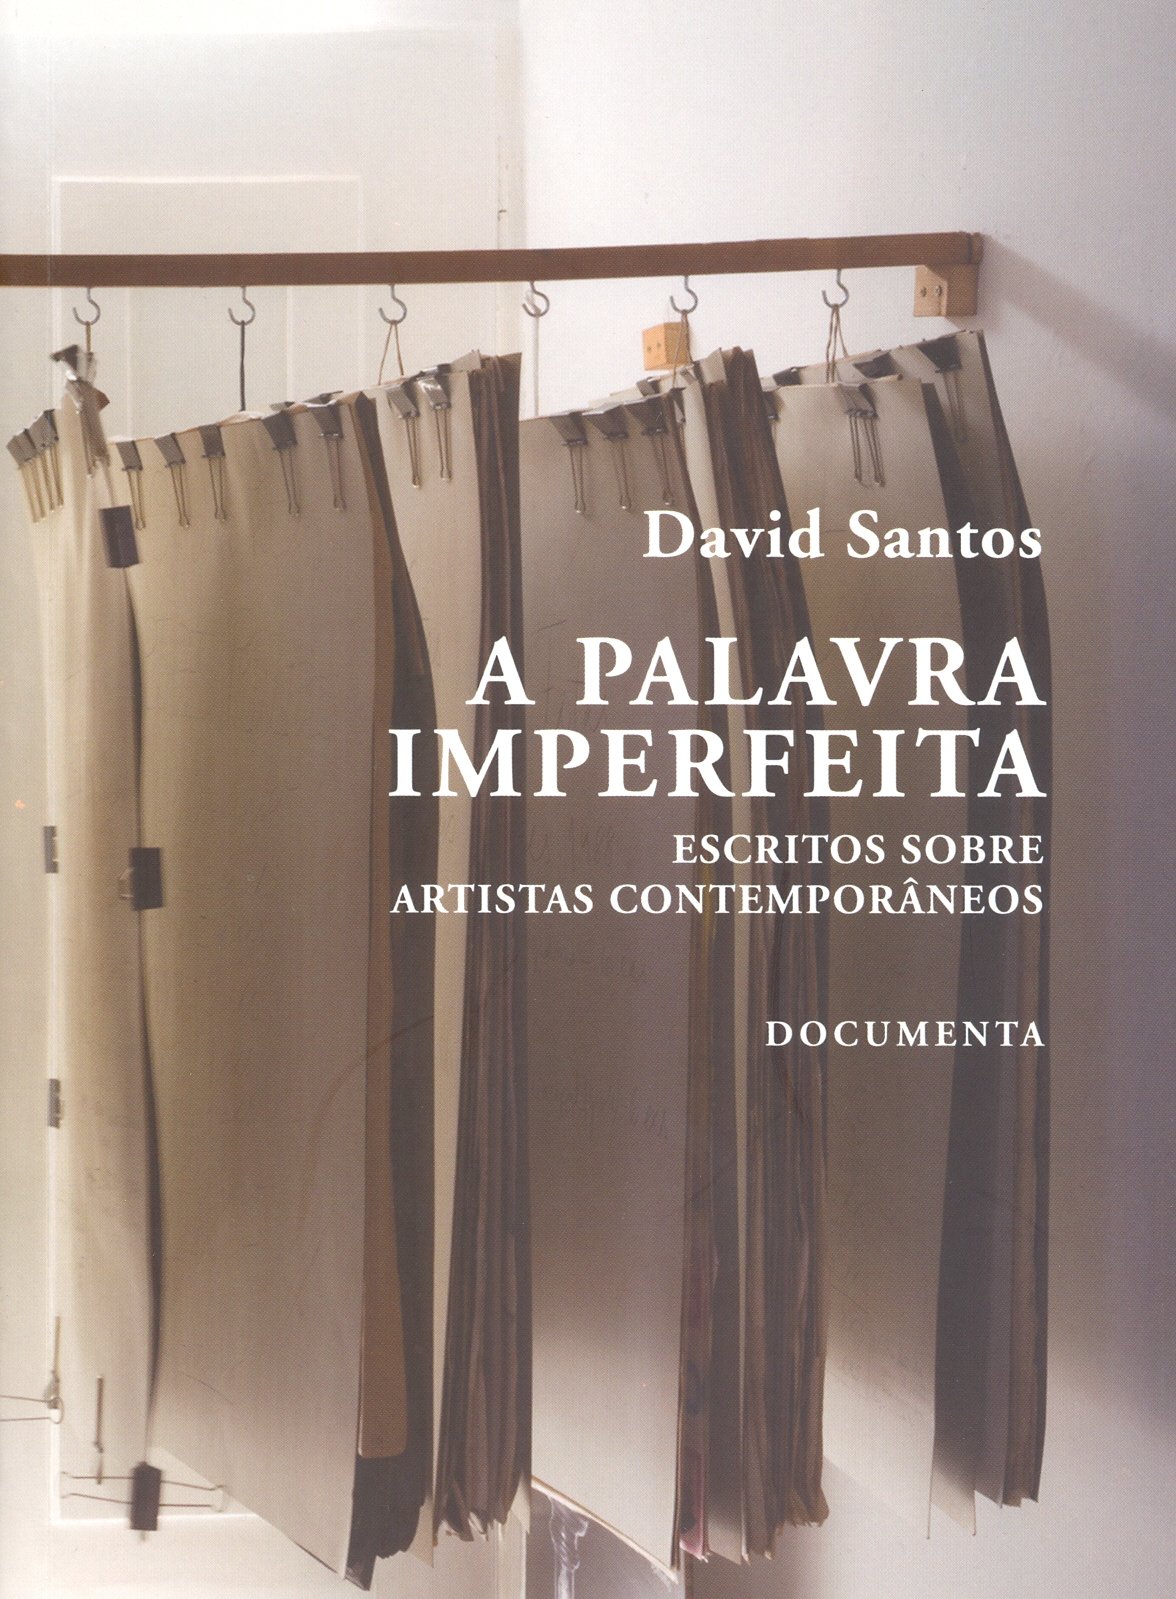 David Santos - A Palavra Imperfeita, escritos sobre artistas contemporâneos